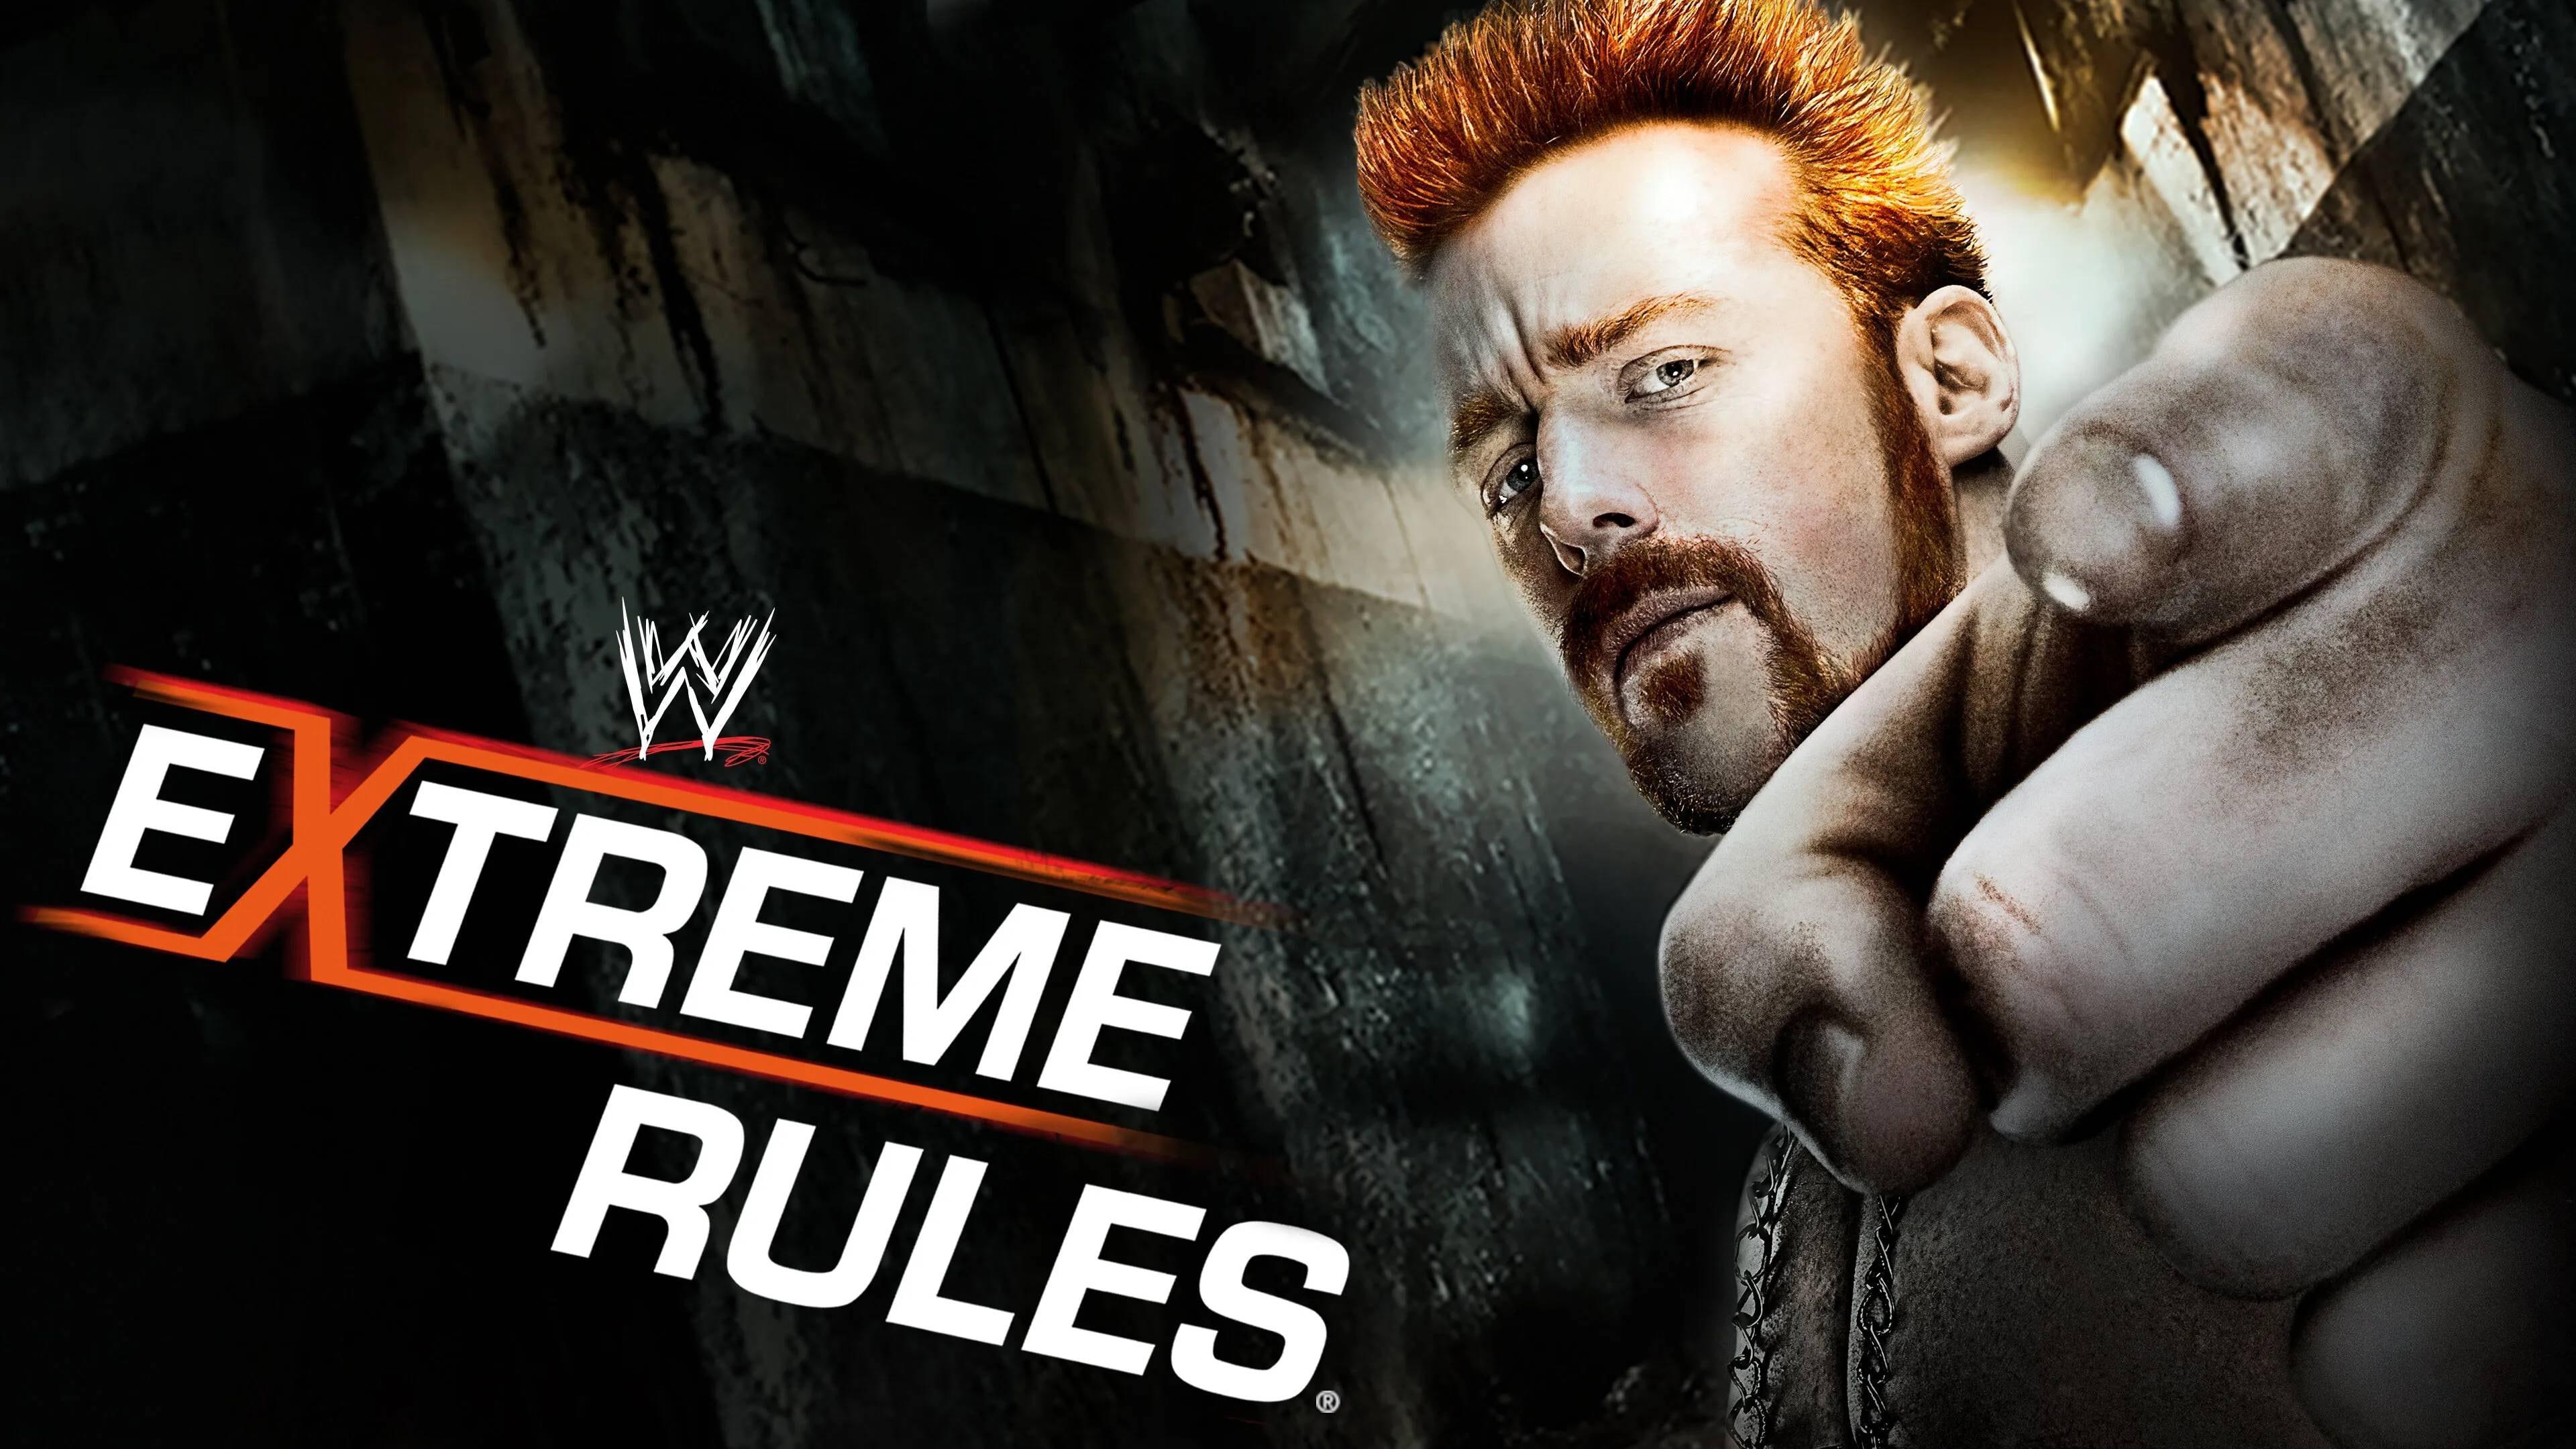 WWE Extreme Rules 2013 backdrop